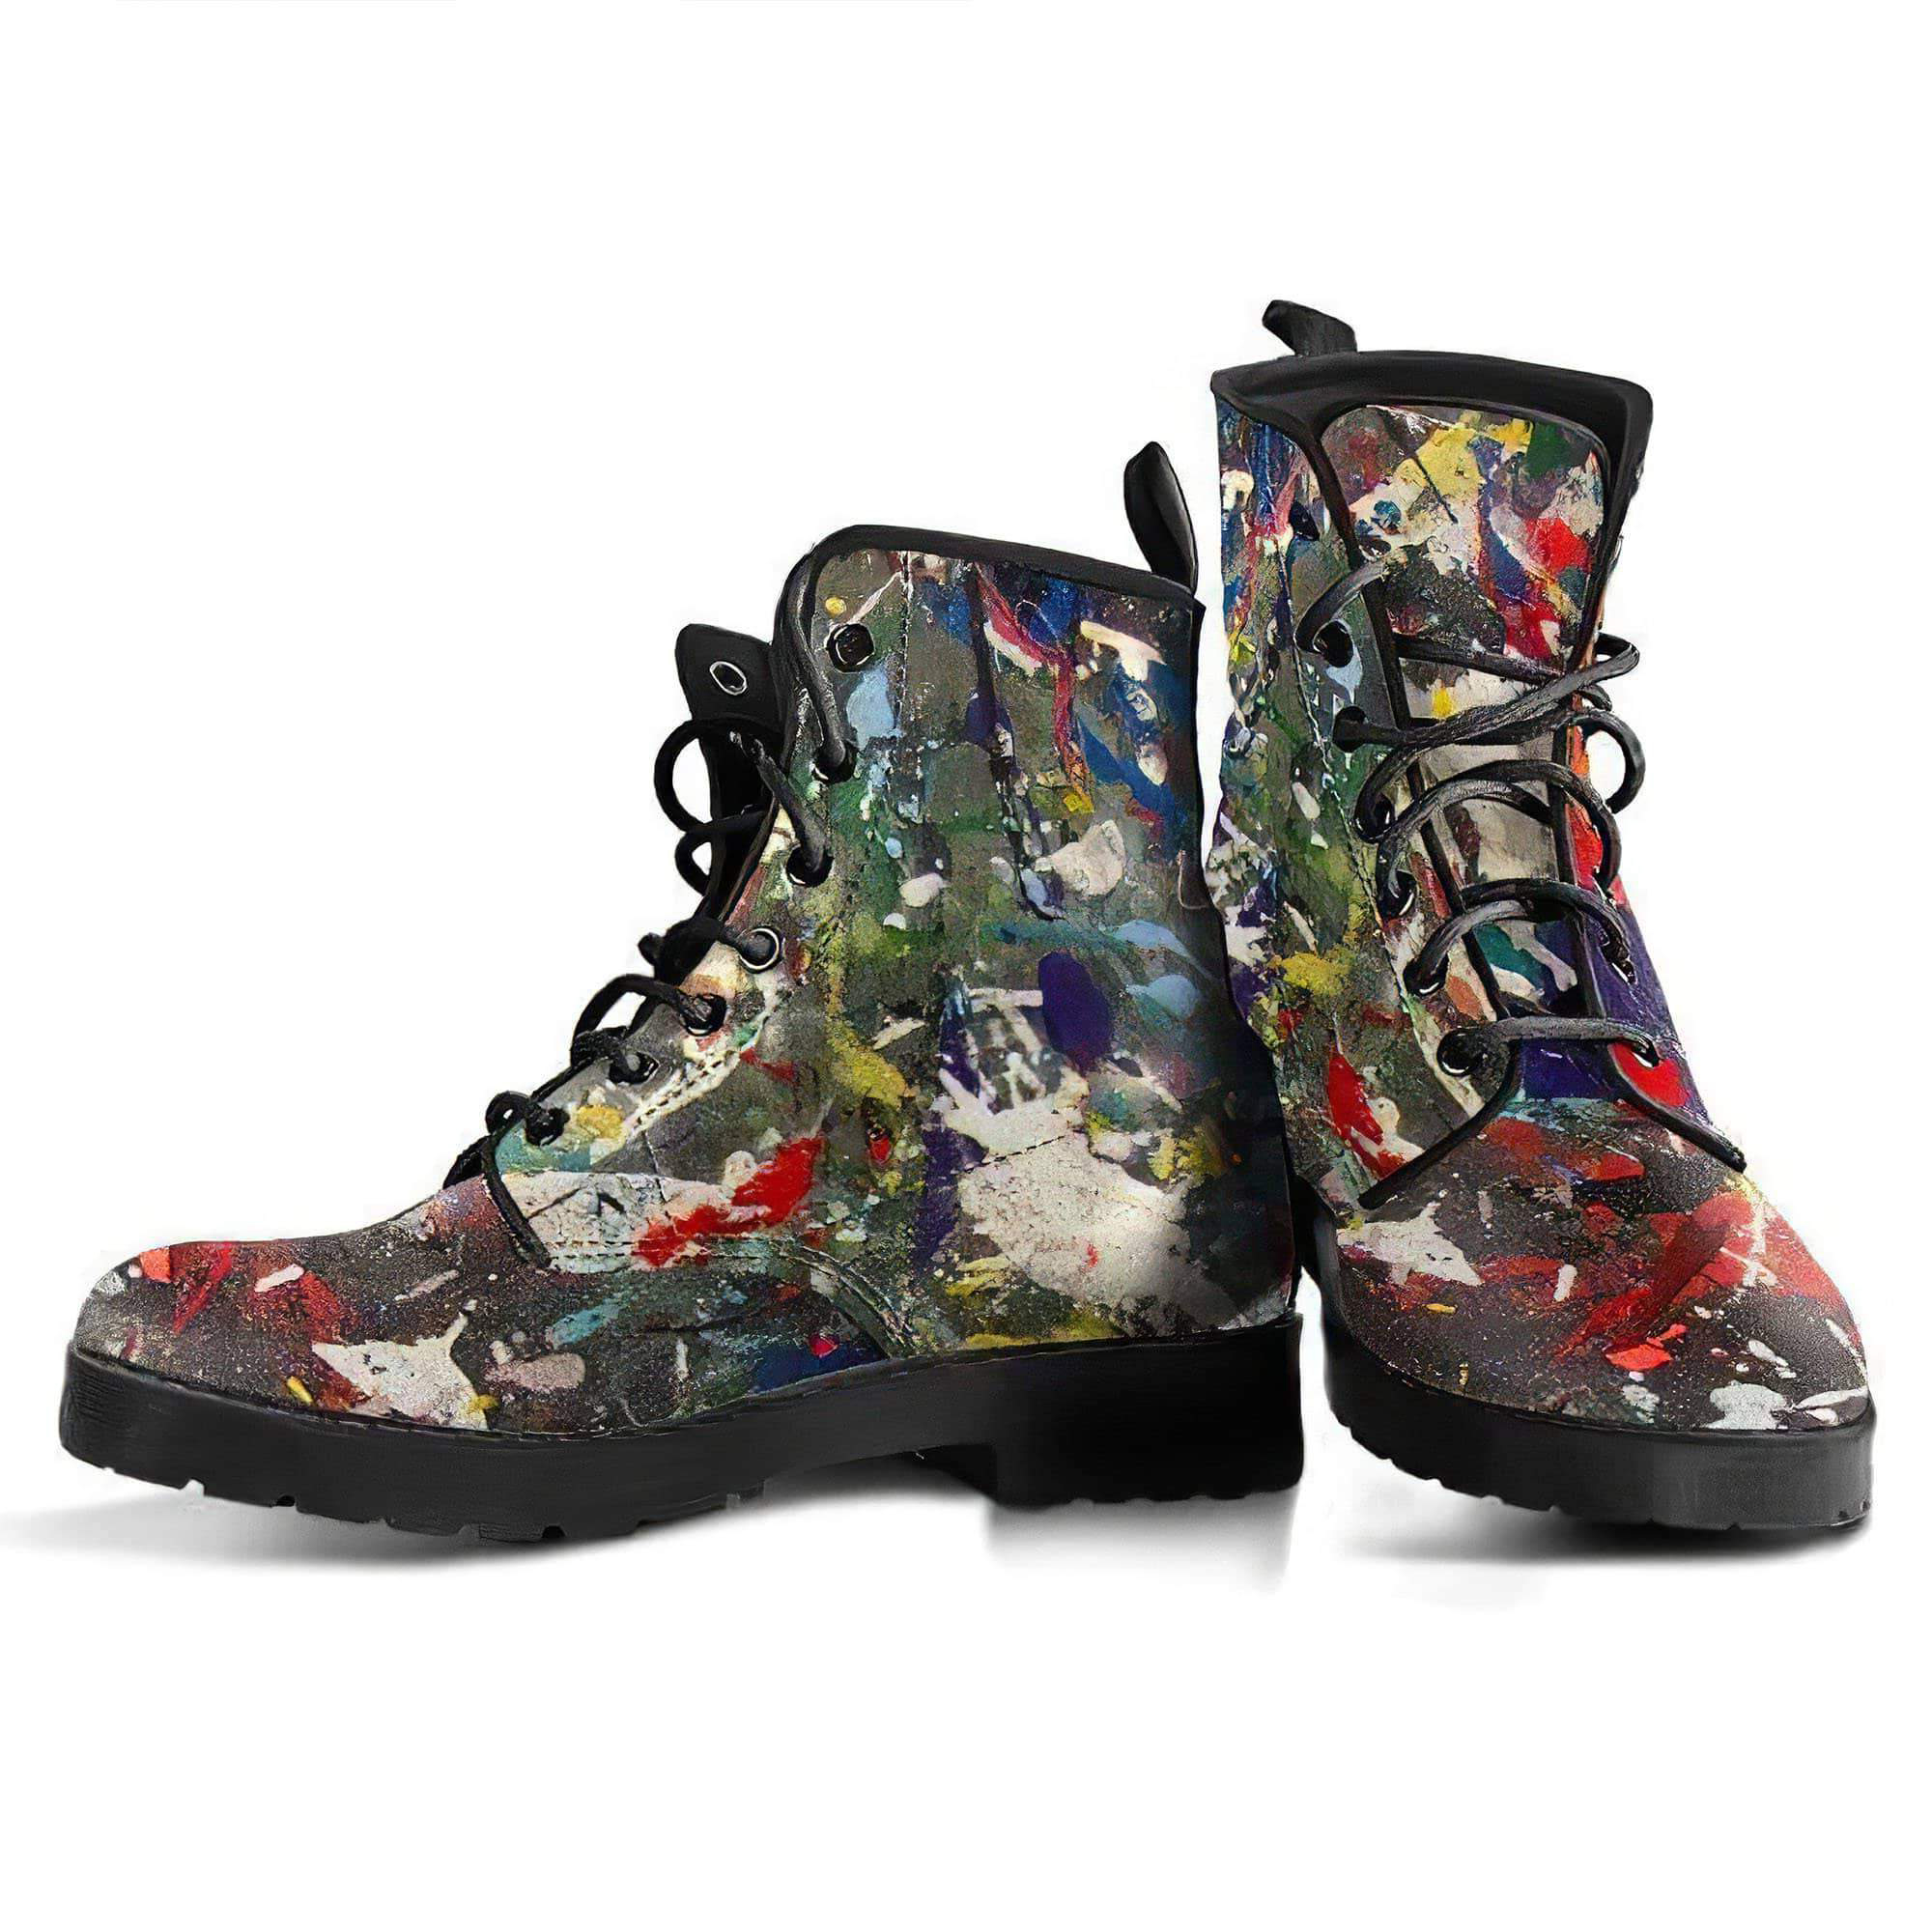 paint-splash-street-art-leather-boots-for-women-women-s-leather-boots-12051922812989.jpg